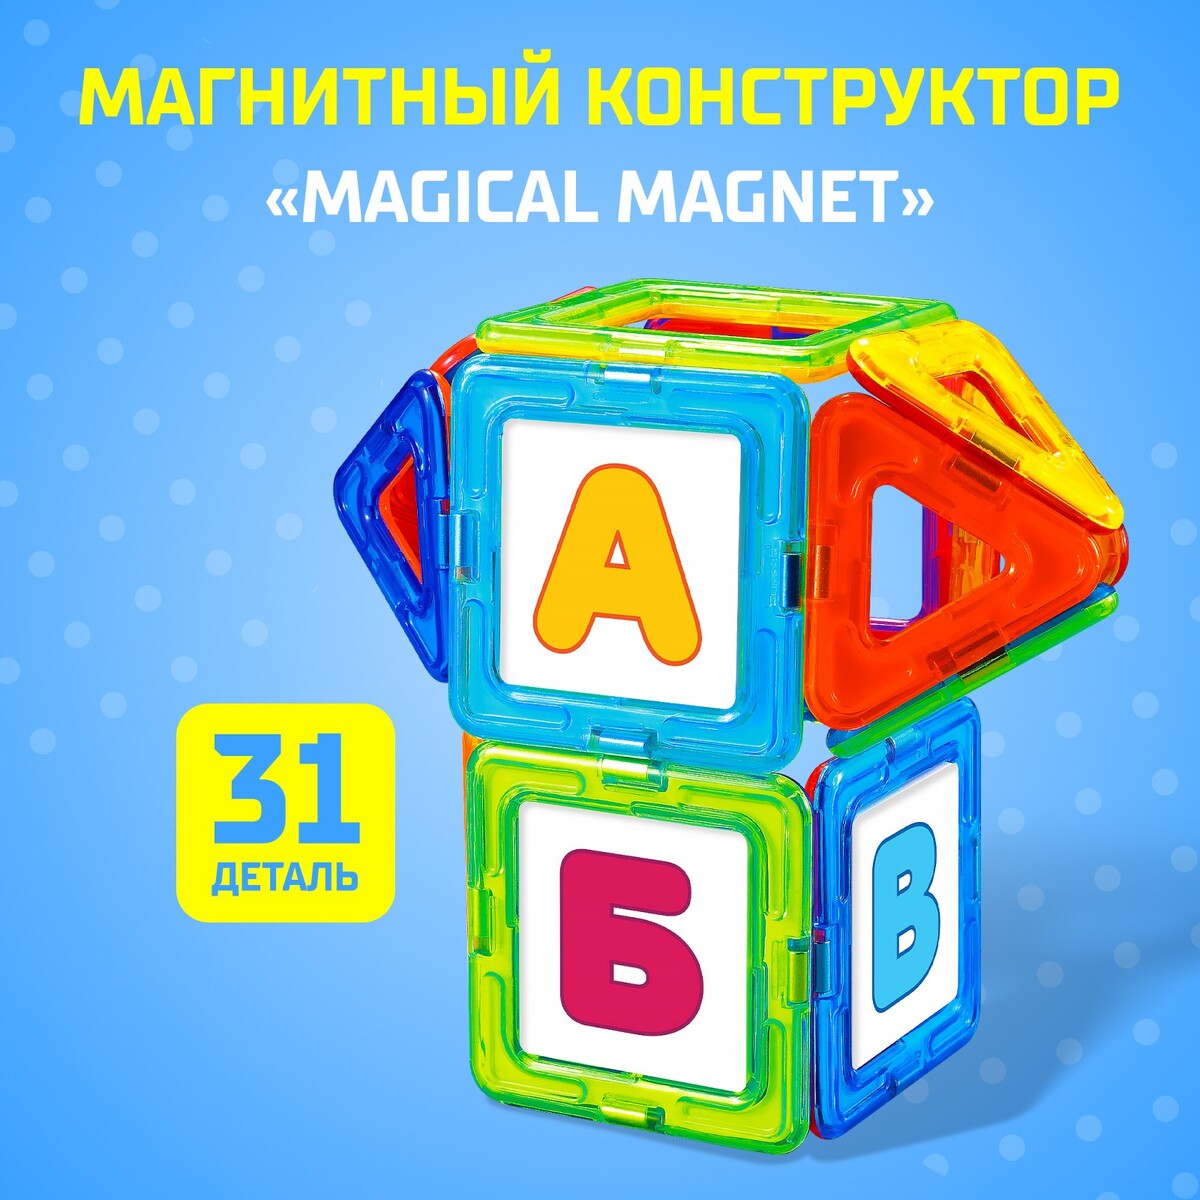   magical magnet, 31 ,  